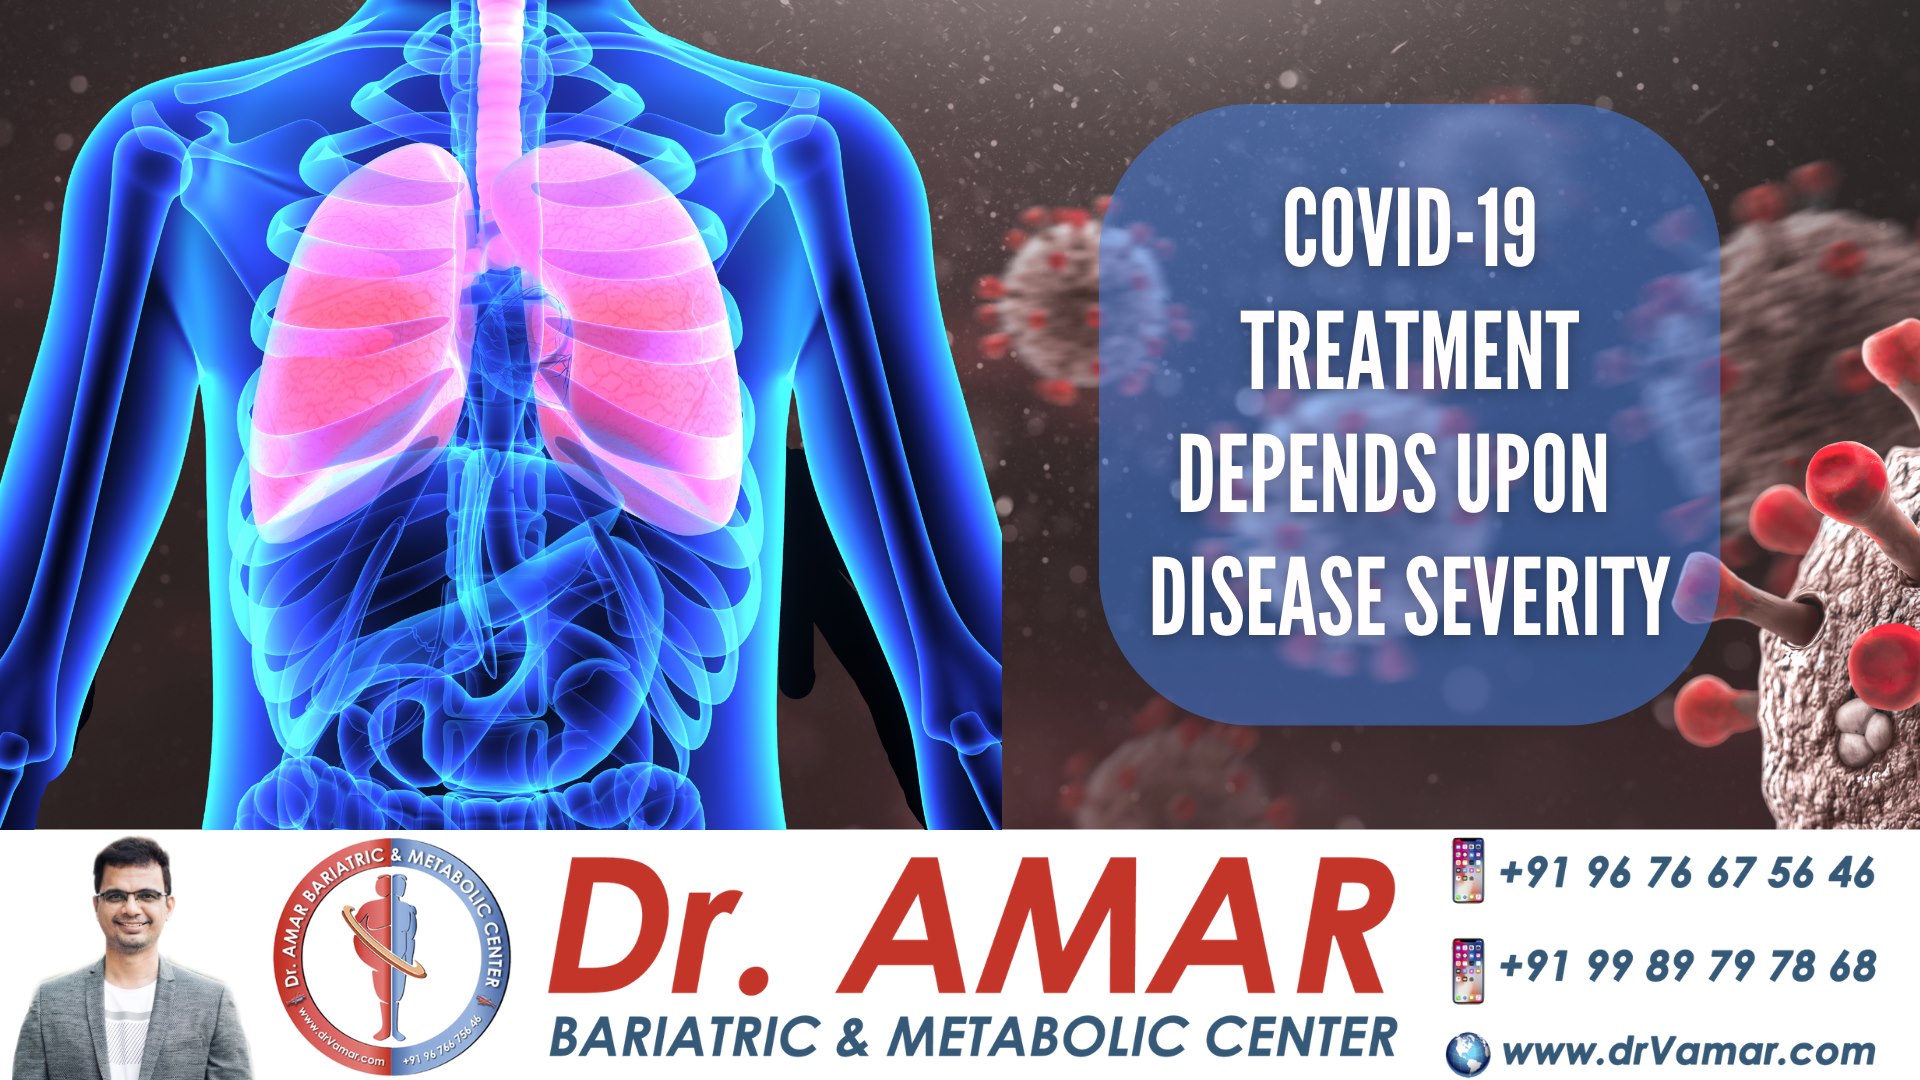 COVID-19 is treated based on disease severity